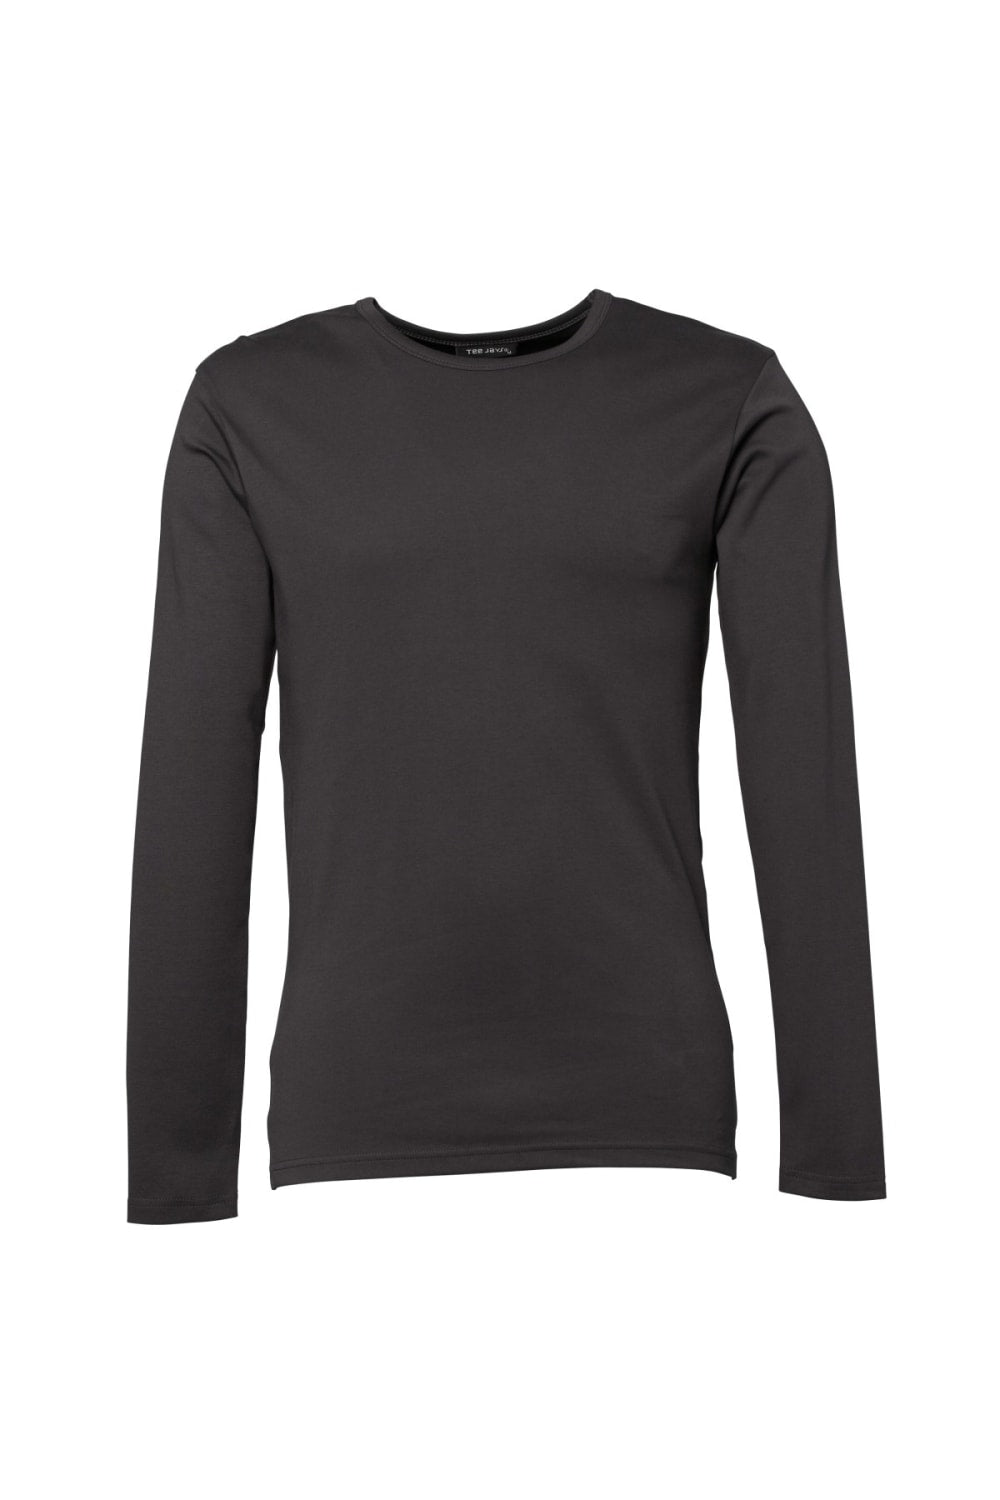 Tee Jays Mens Interlock Long Sleeve T-Shirt (Dark Grey)